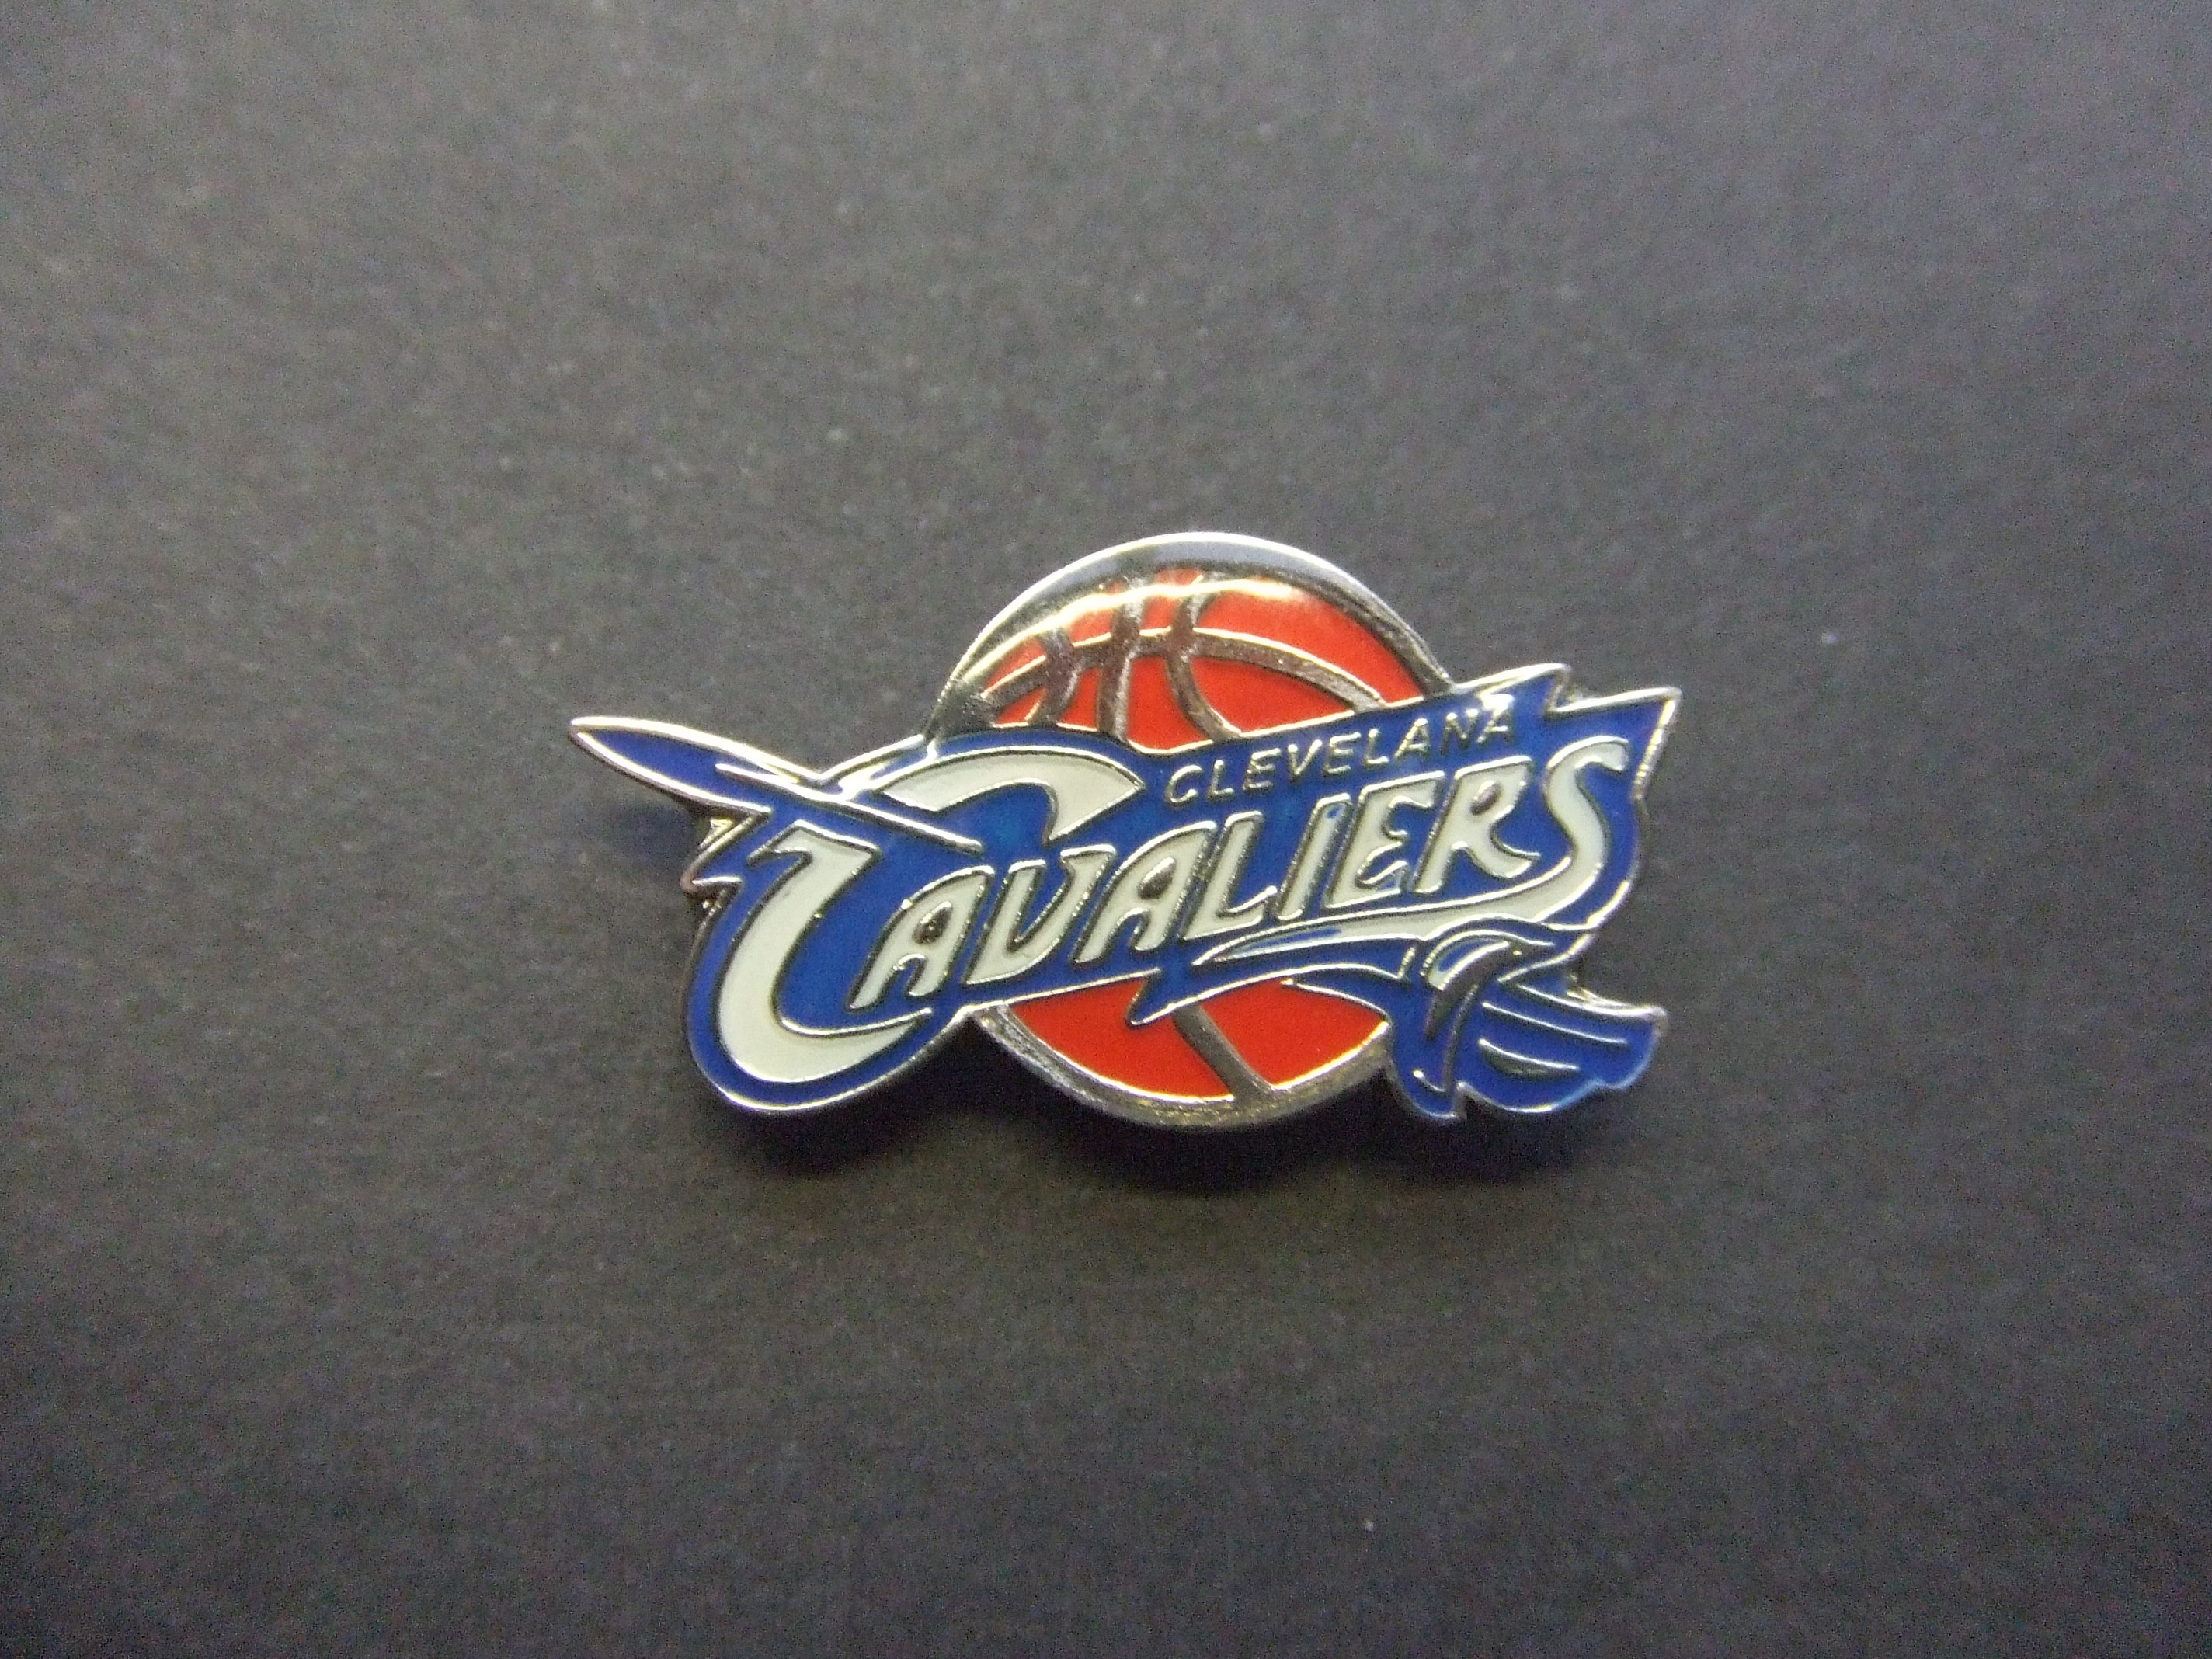 Basketbalteam Cleveland Cavaliers Ohio